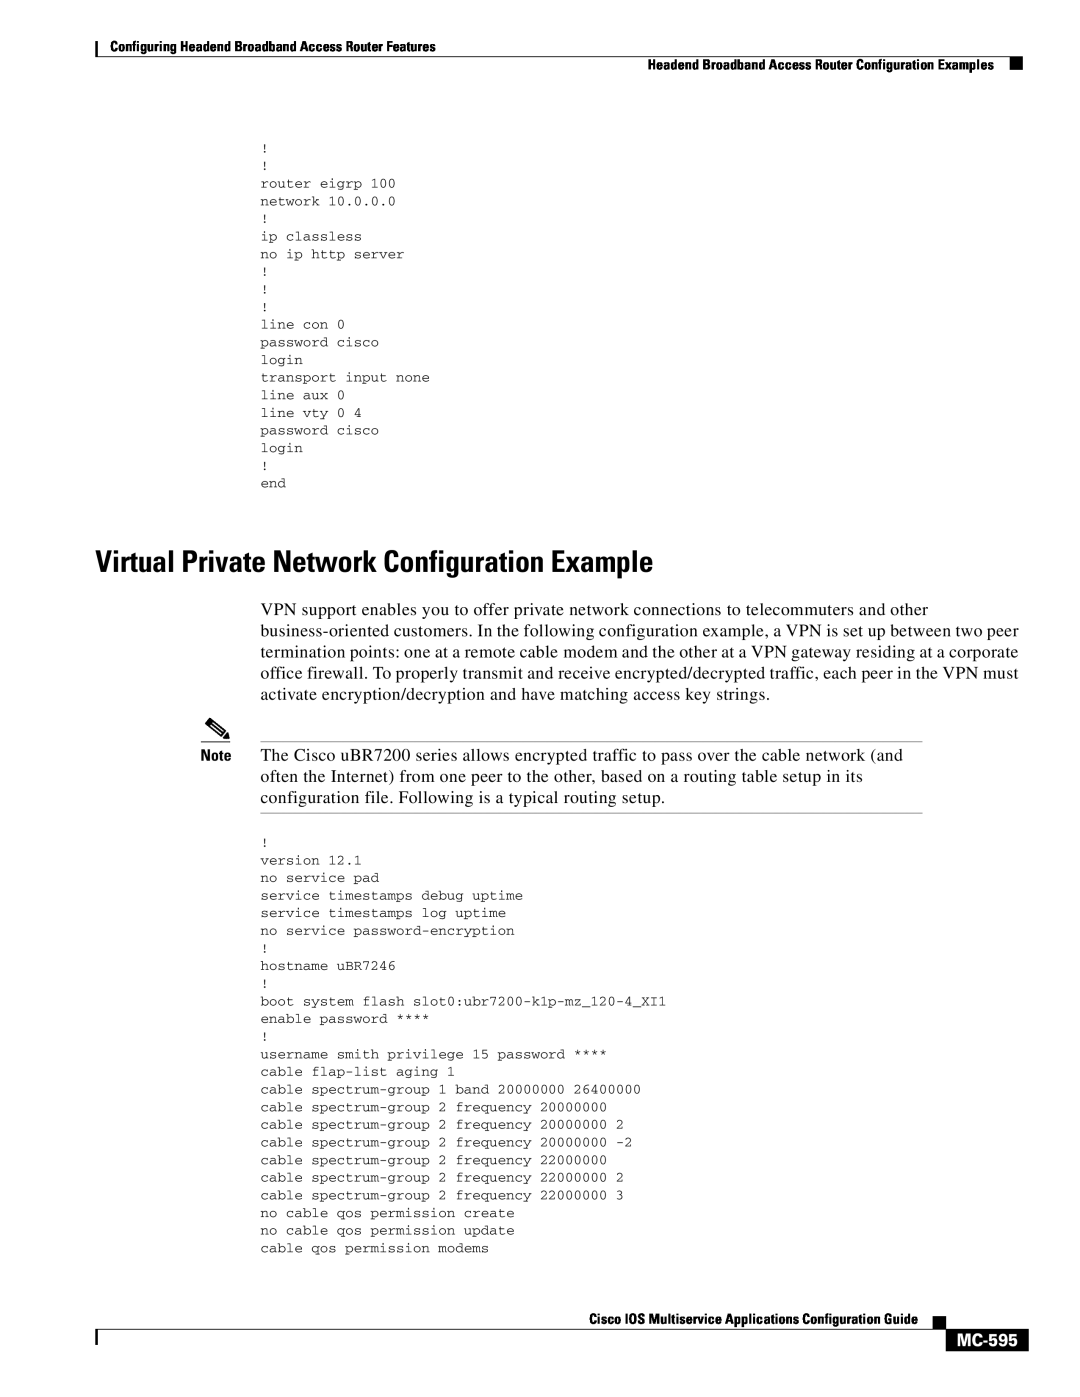 Cisco Systems uBR7200 manual Virtual Private Network Configuration Example, MC-595 